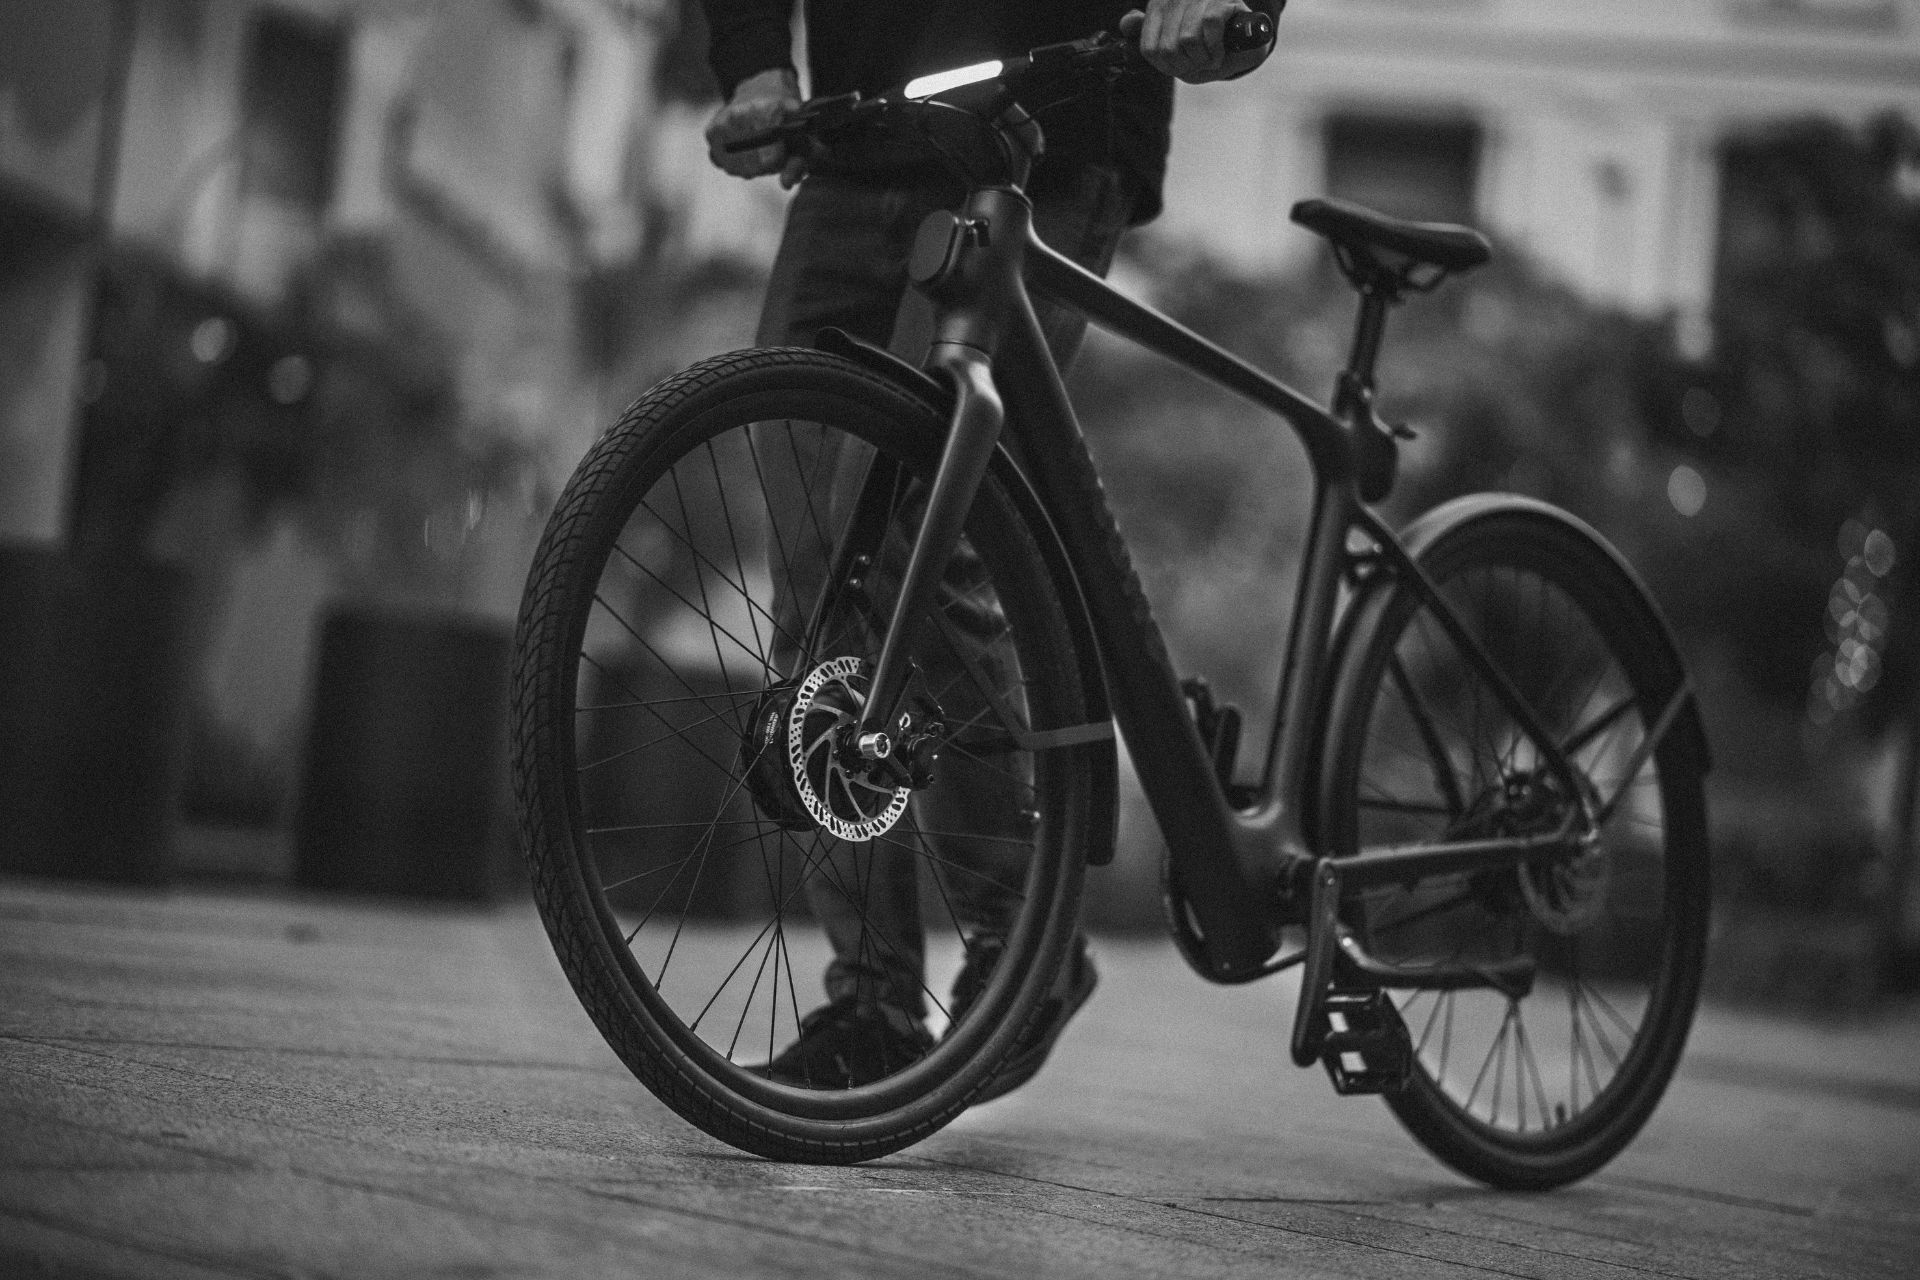 Modmo Saigon+ Electric Bicycle - RRP £2800 - Size M (Rider: 155-175cm) - Image 6 of 19